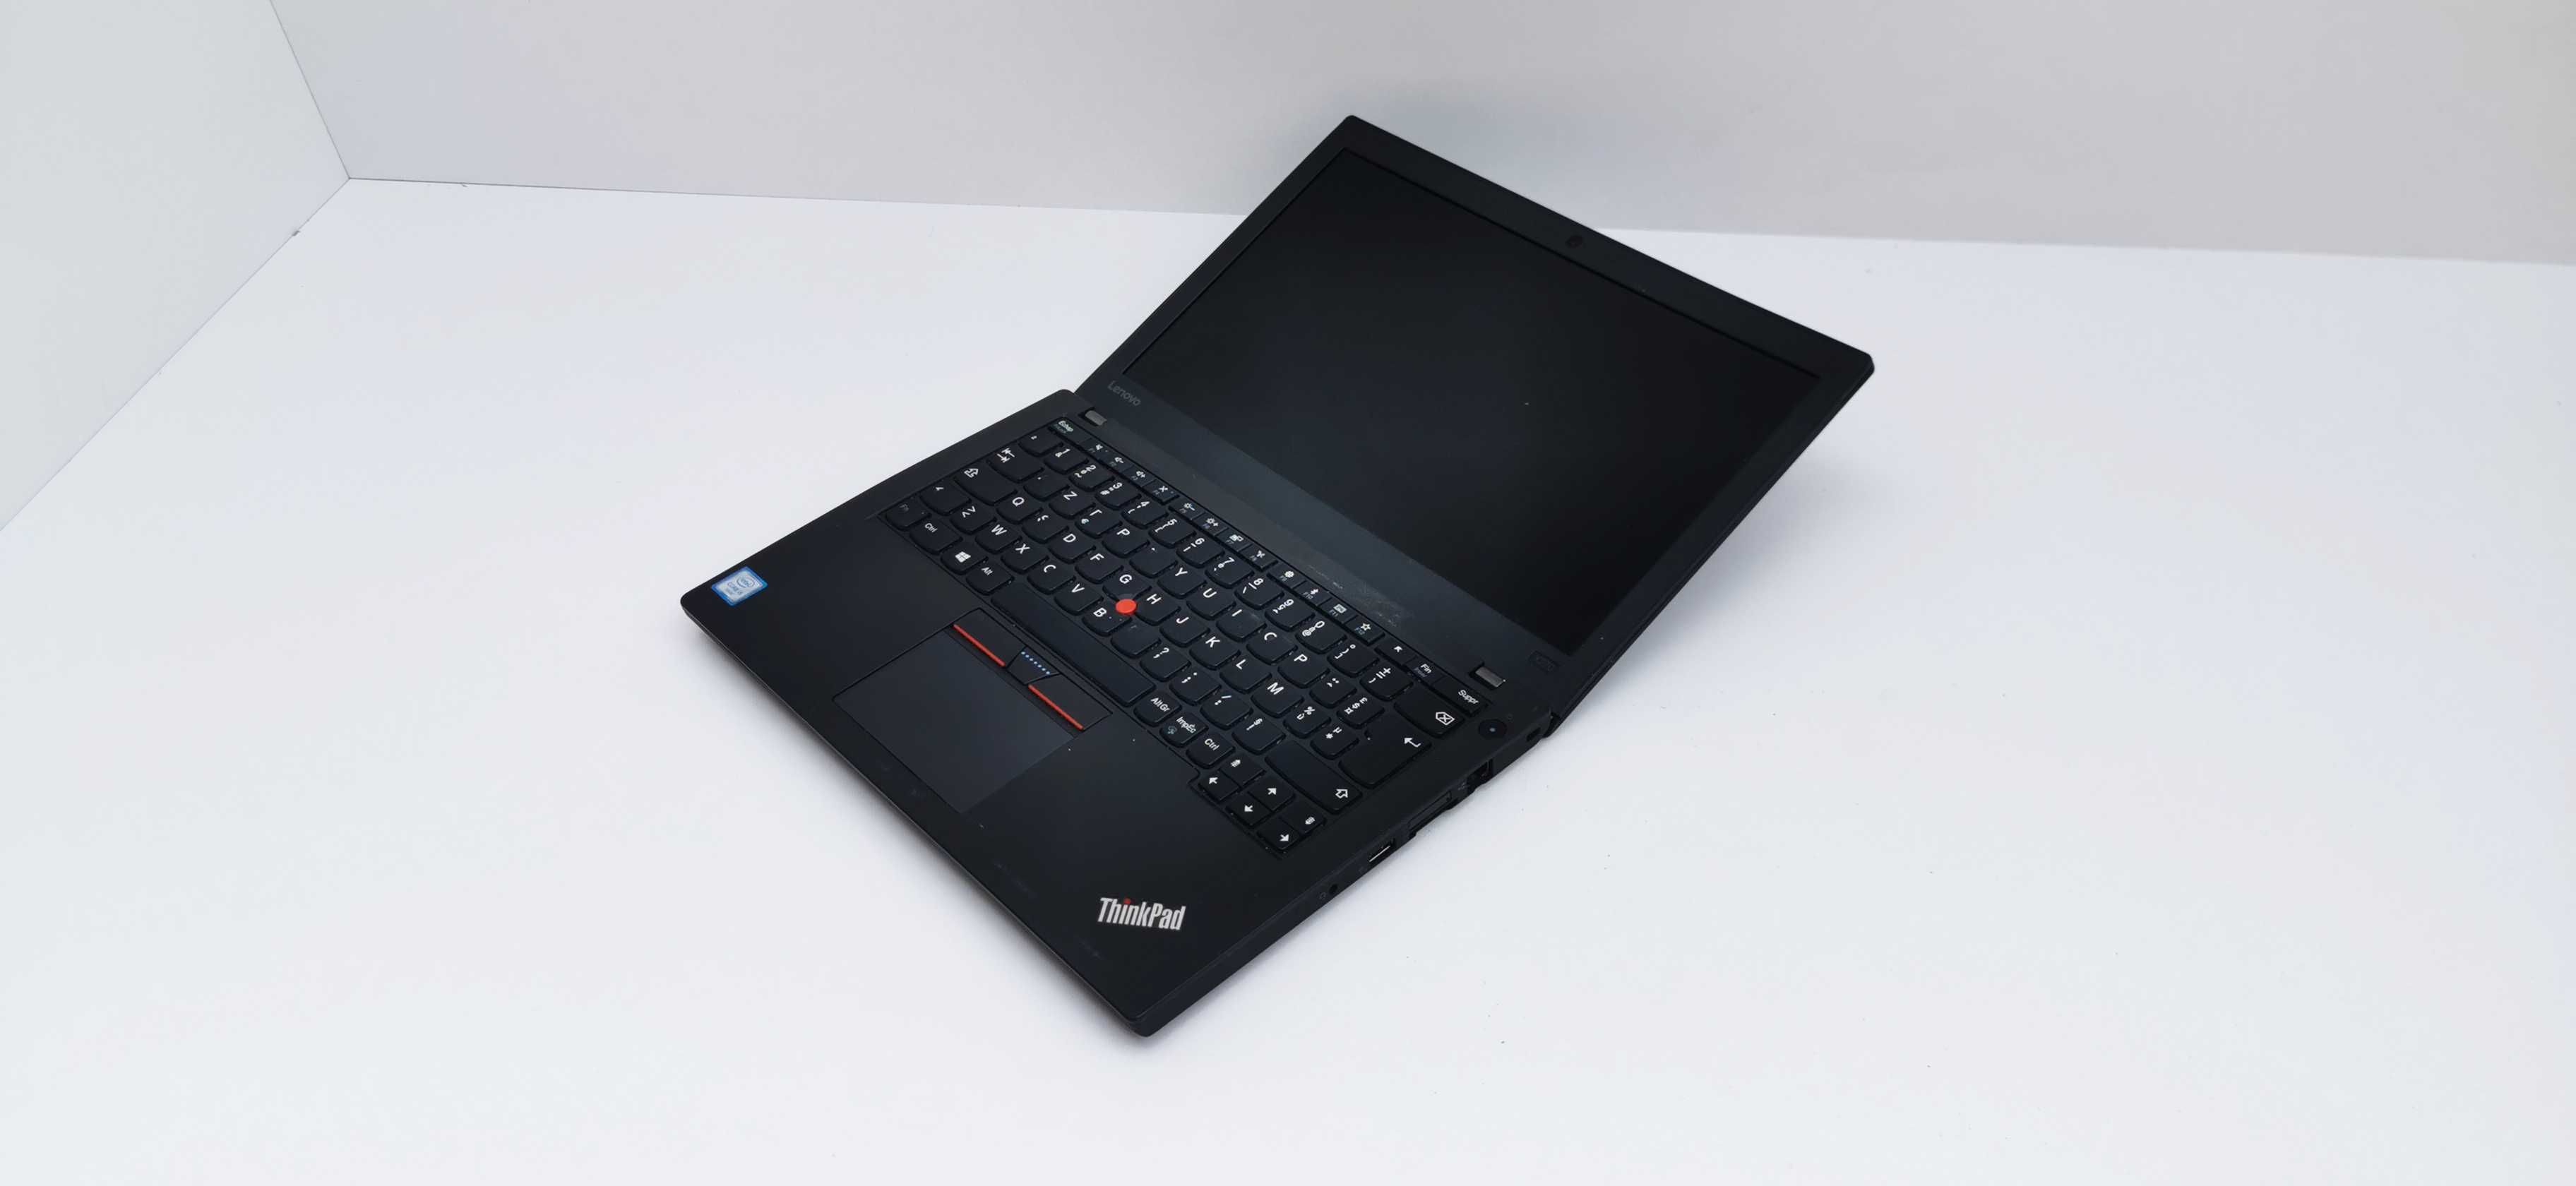 Lenovo ThinkPad x270 intel i5 256 GB SSD 8 GB RAM DDR4